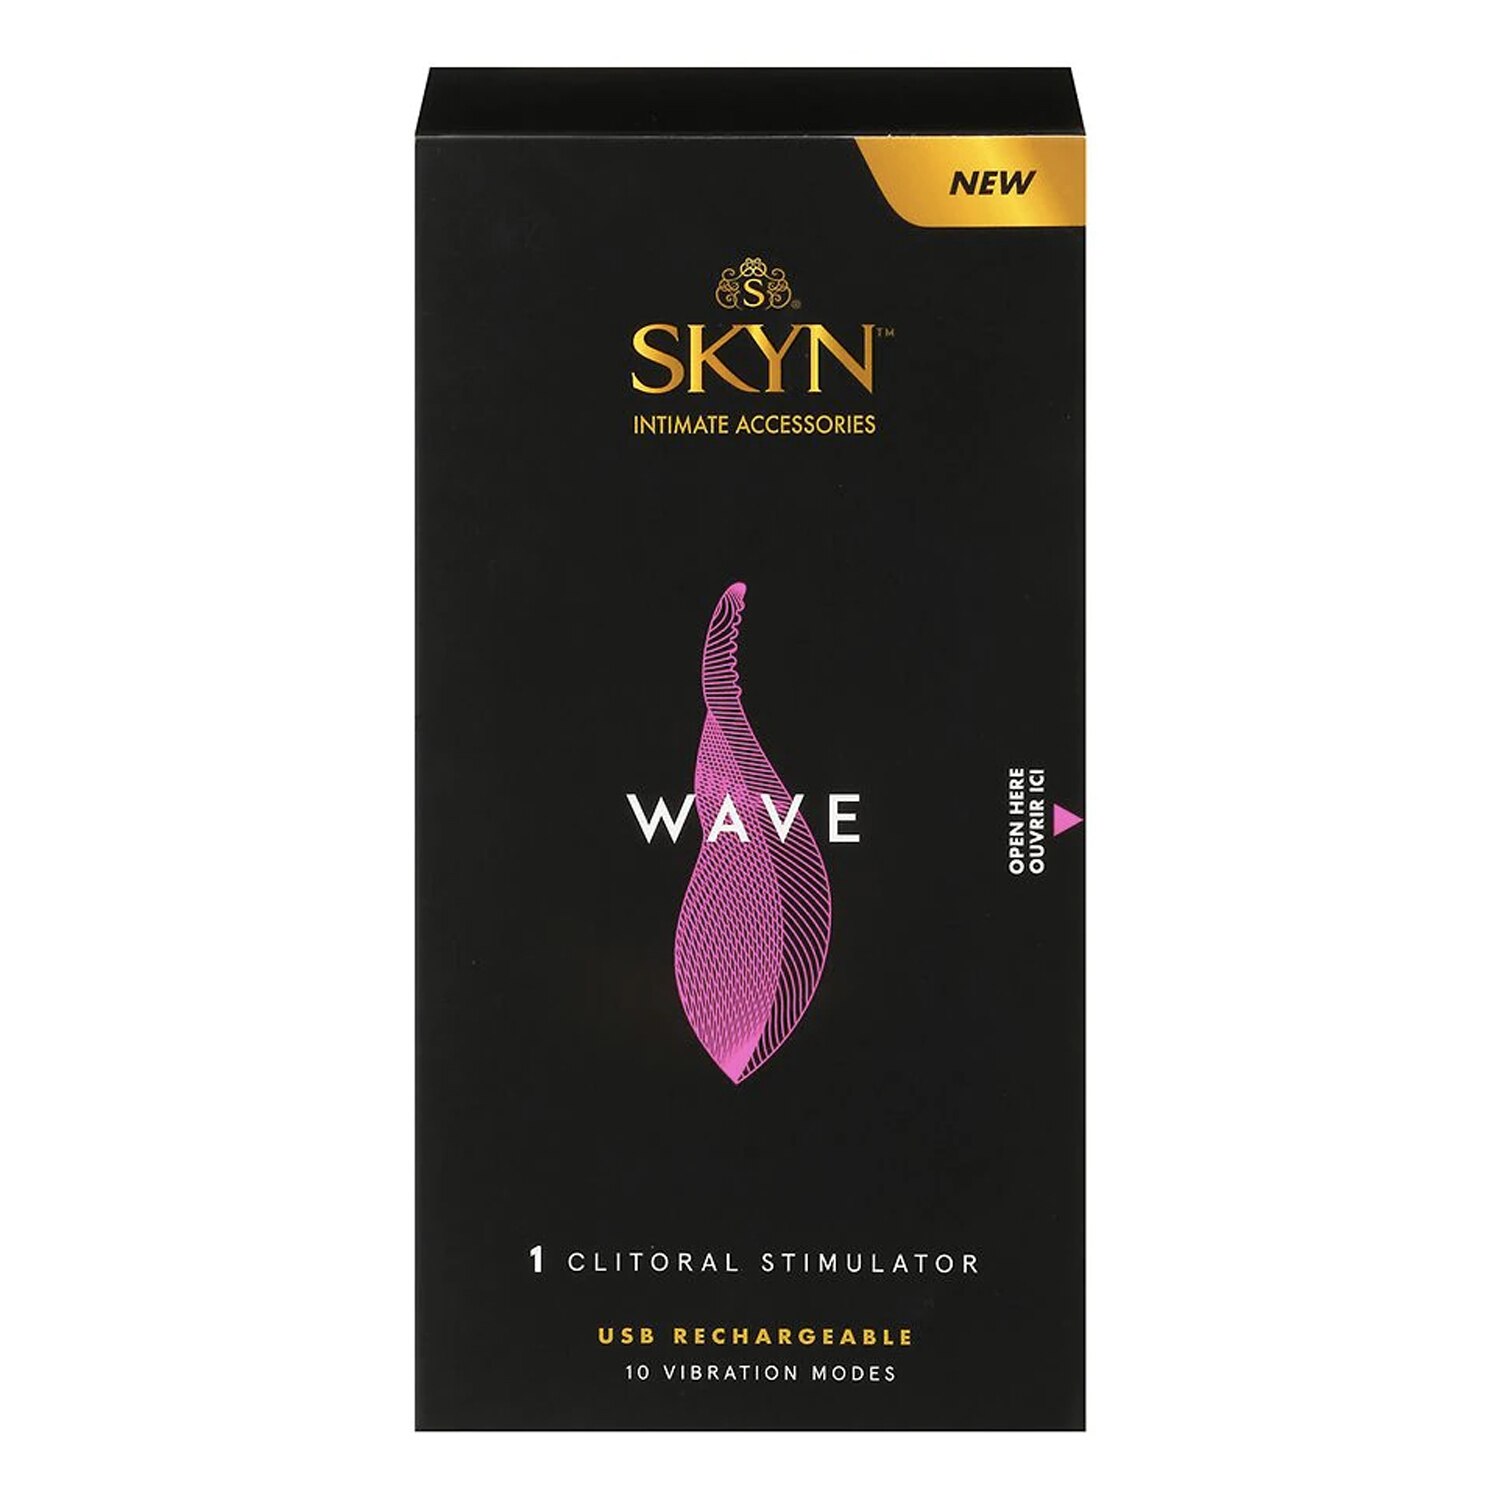 SKYN Wave Clitoral Stimulator